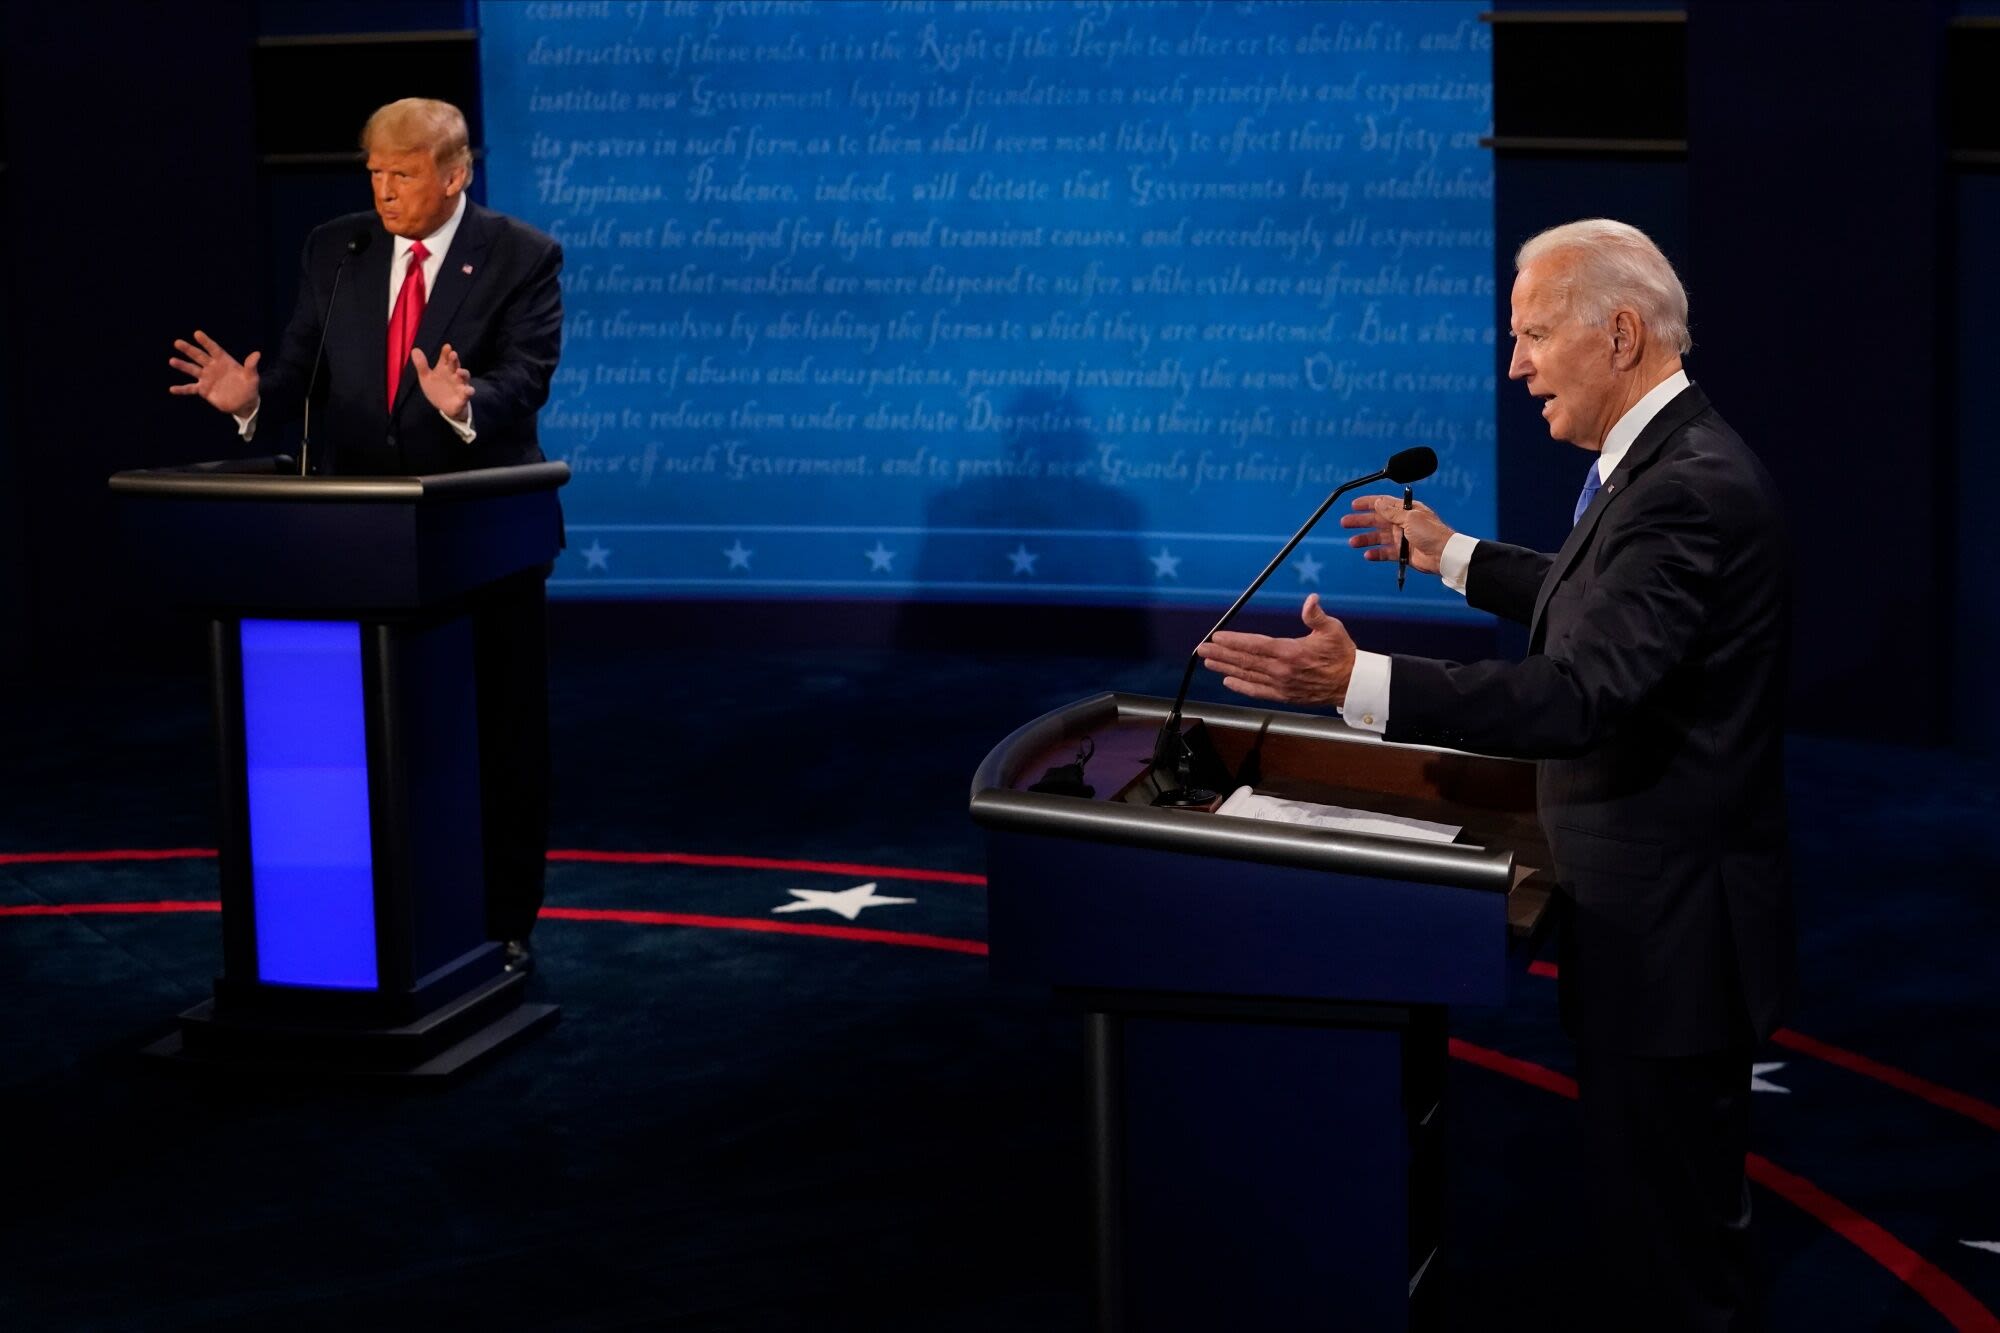 Biden Proposes Two Trump Debates, Won’t Do Traditional Ones